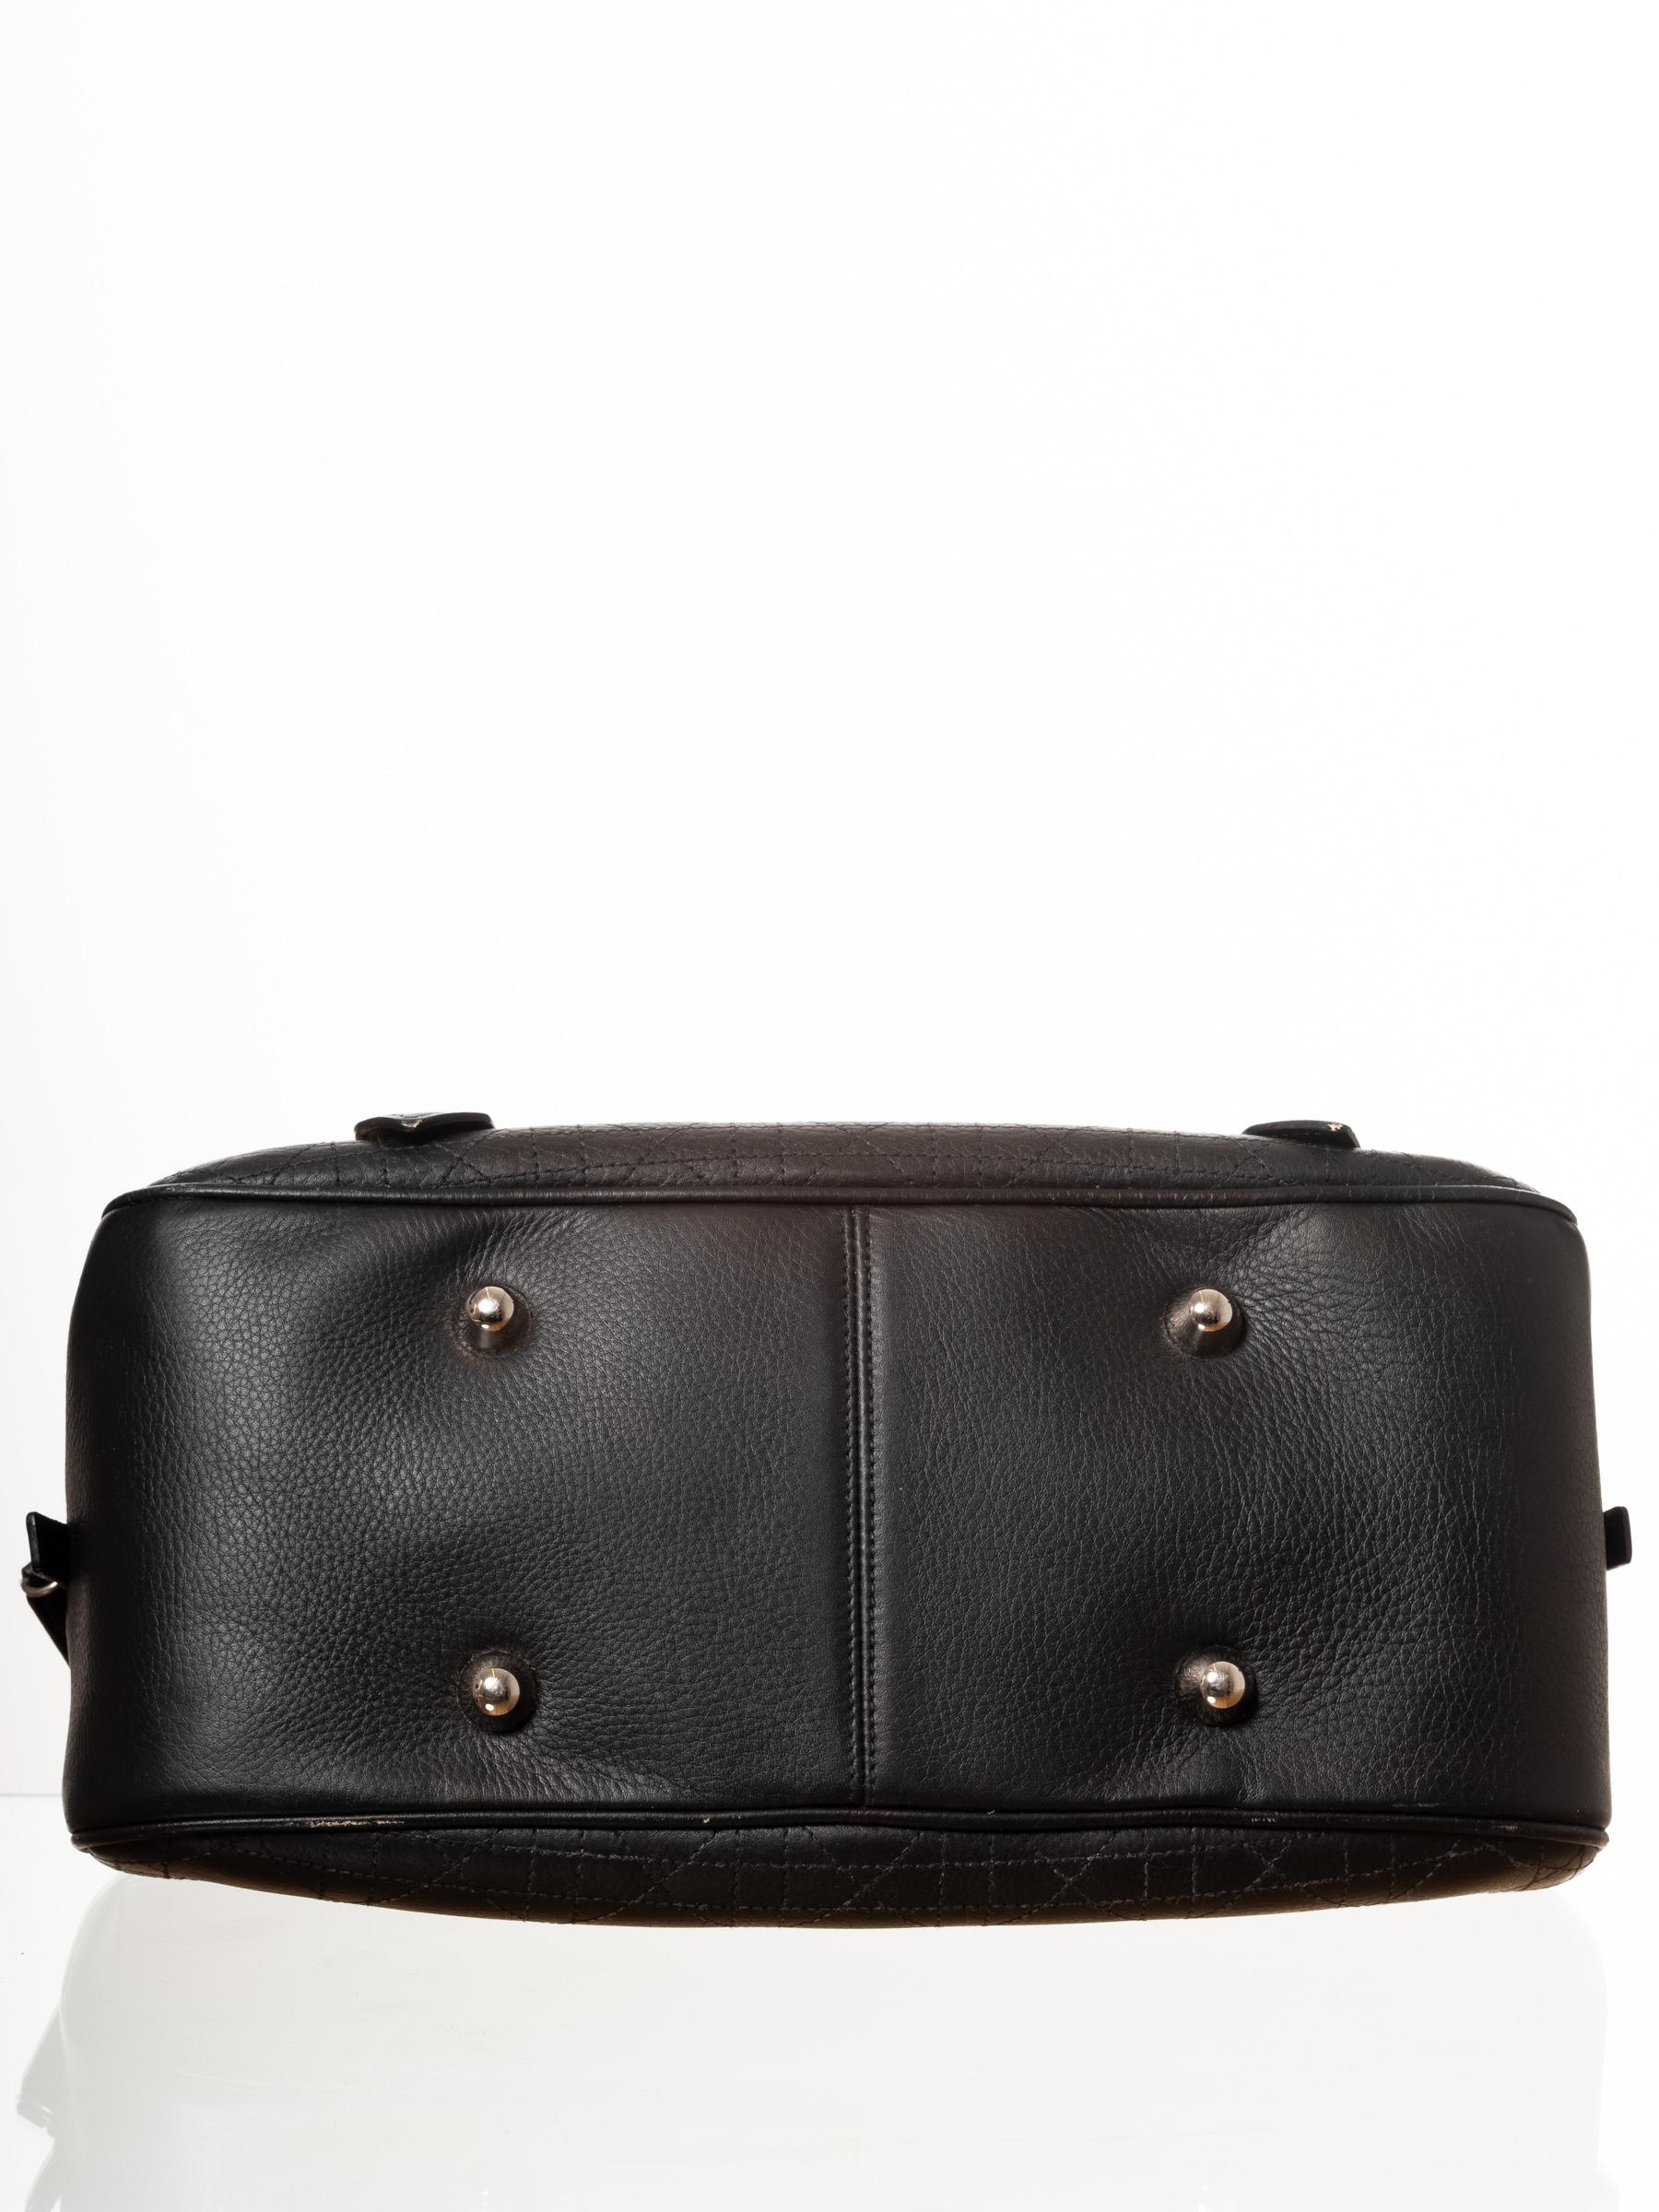 Dior Vintage Black Calfskin Cannage Handbag 2005 1